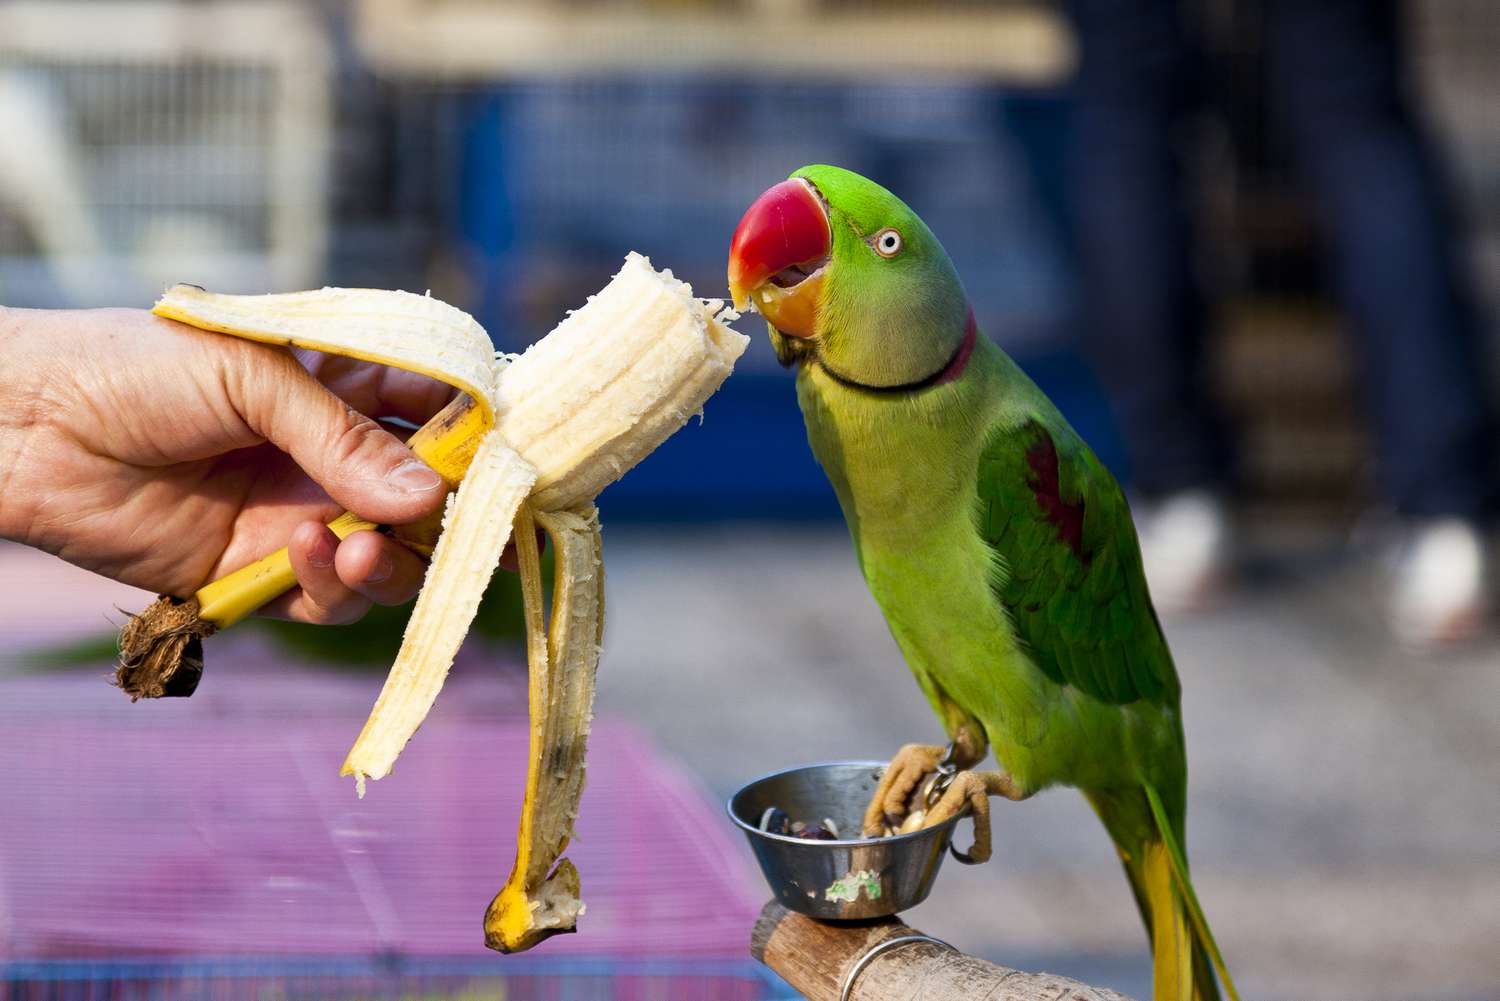 How do you make your birds eat vegetables?